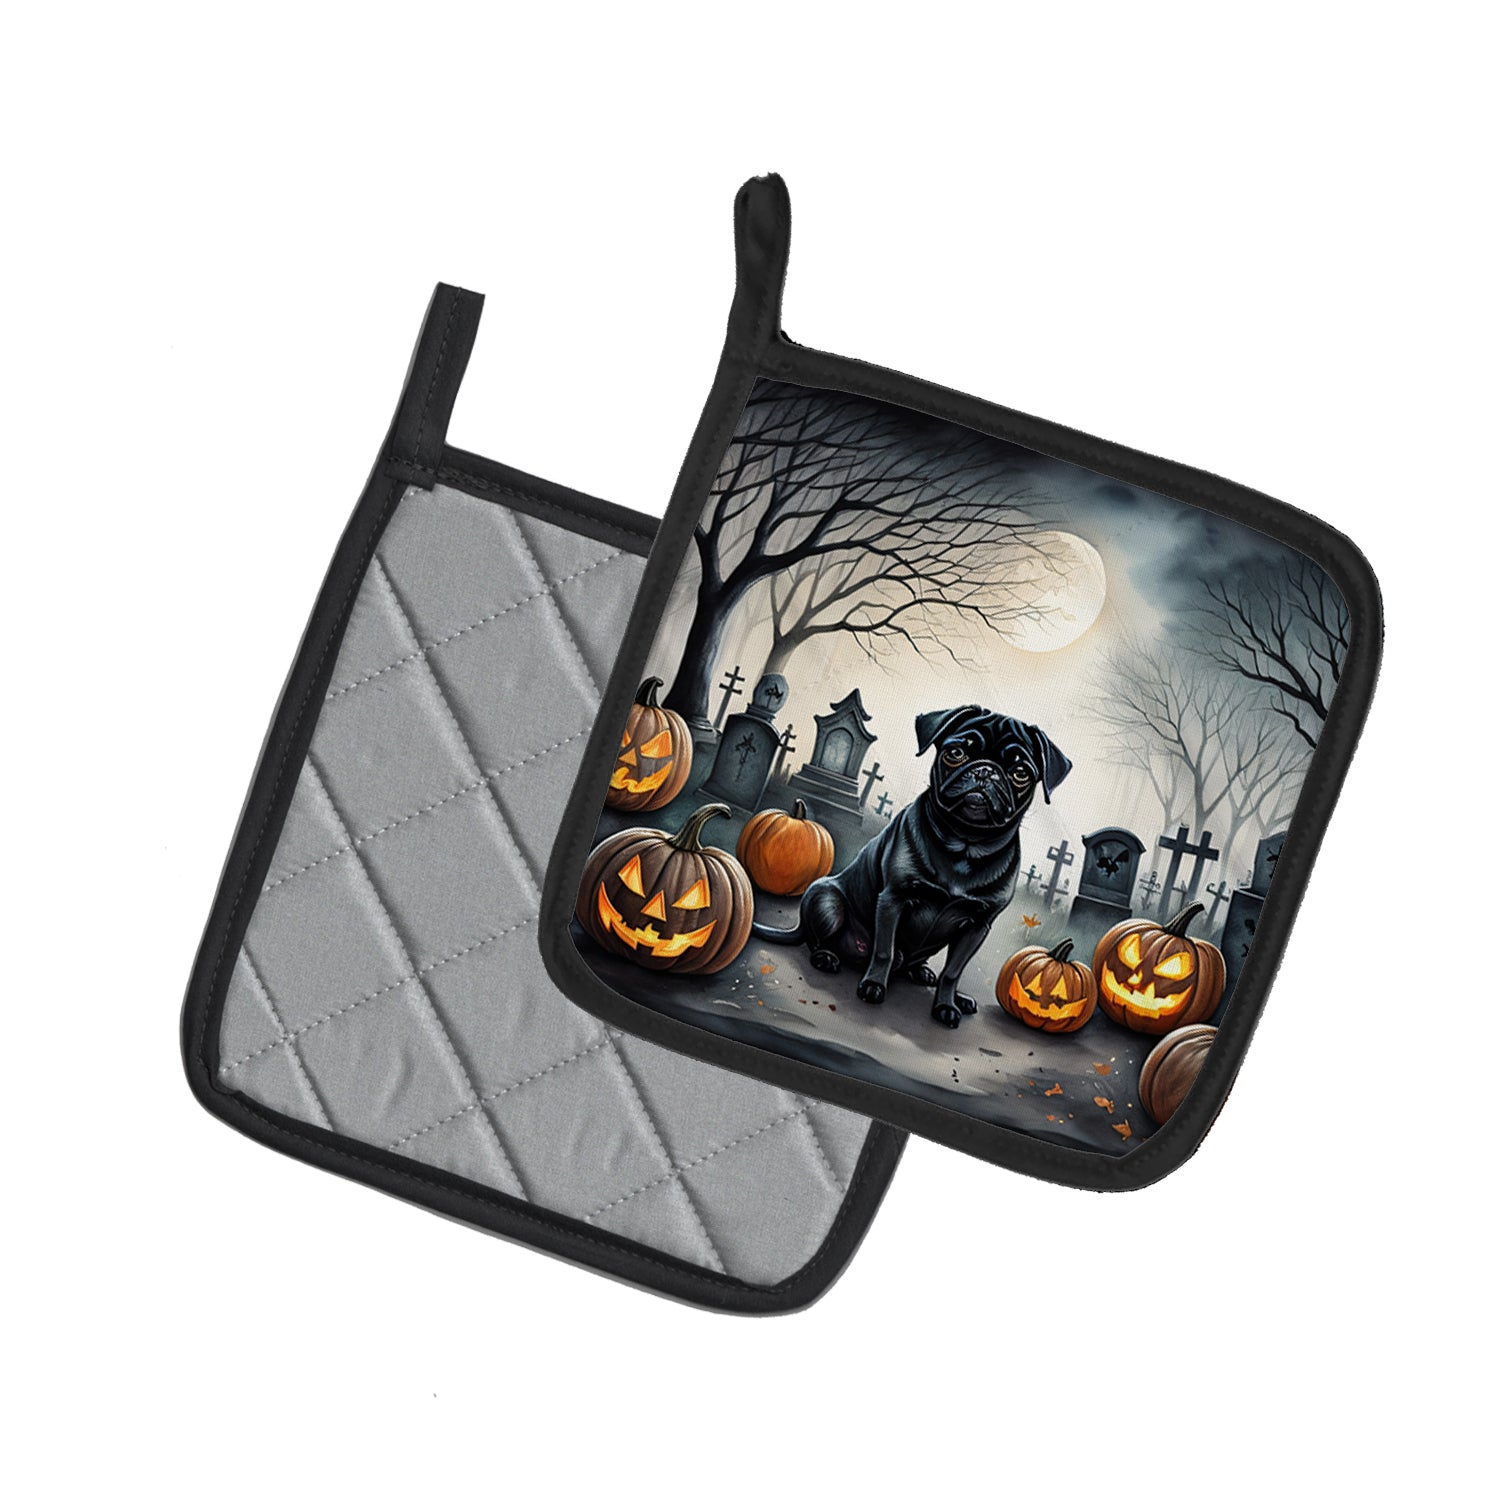 Black Pug Spooky Halloween Pair of Pot Holders